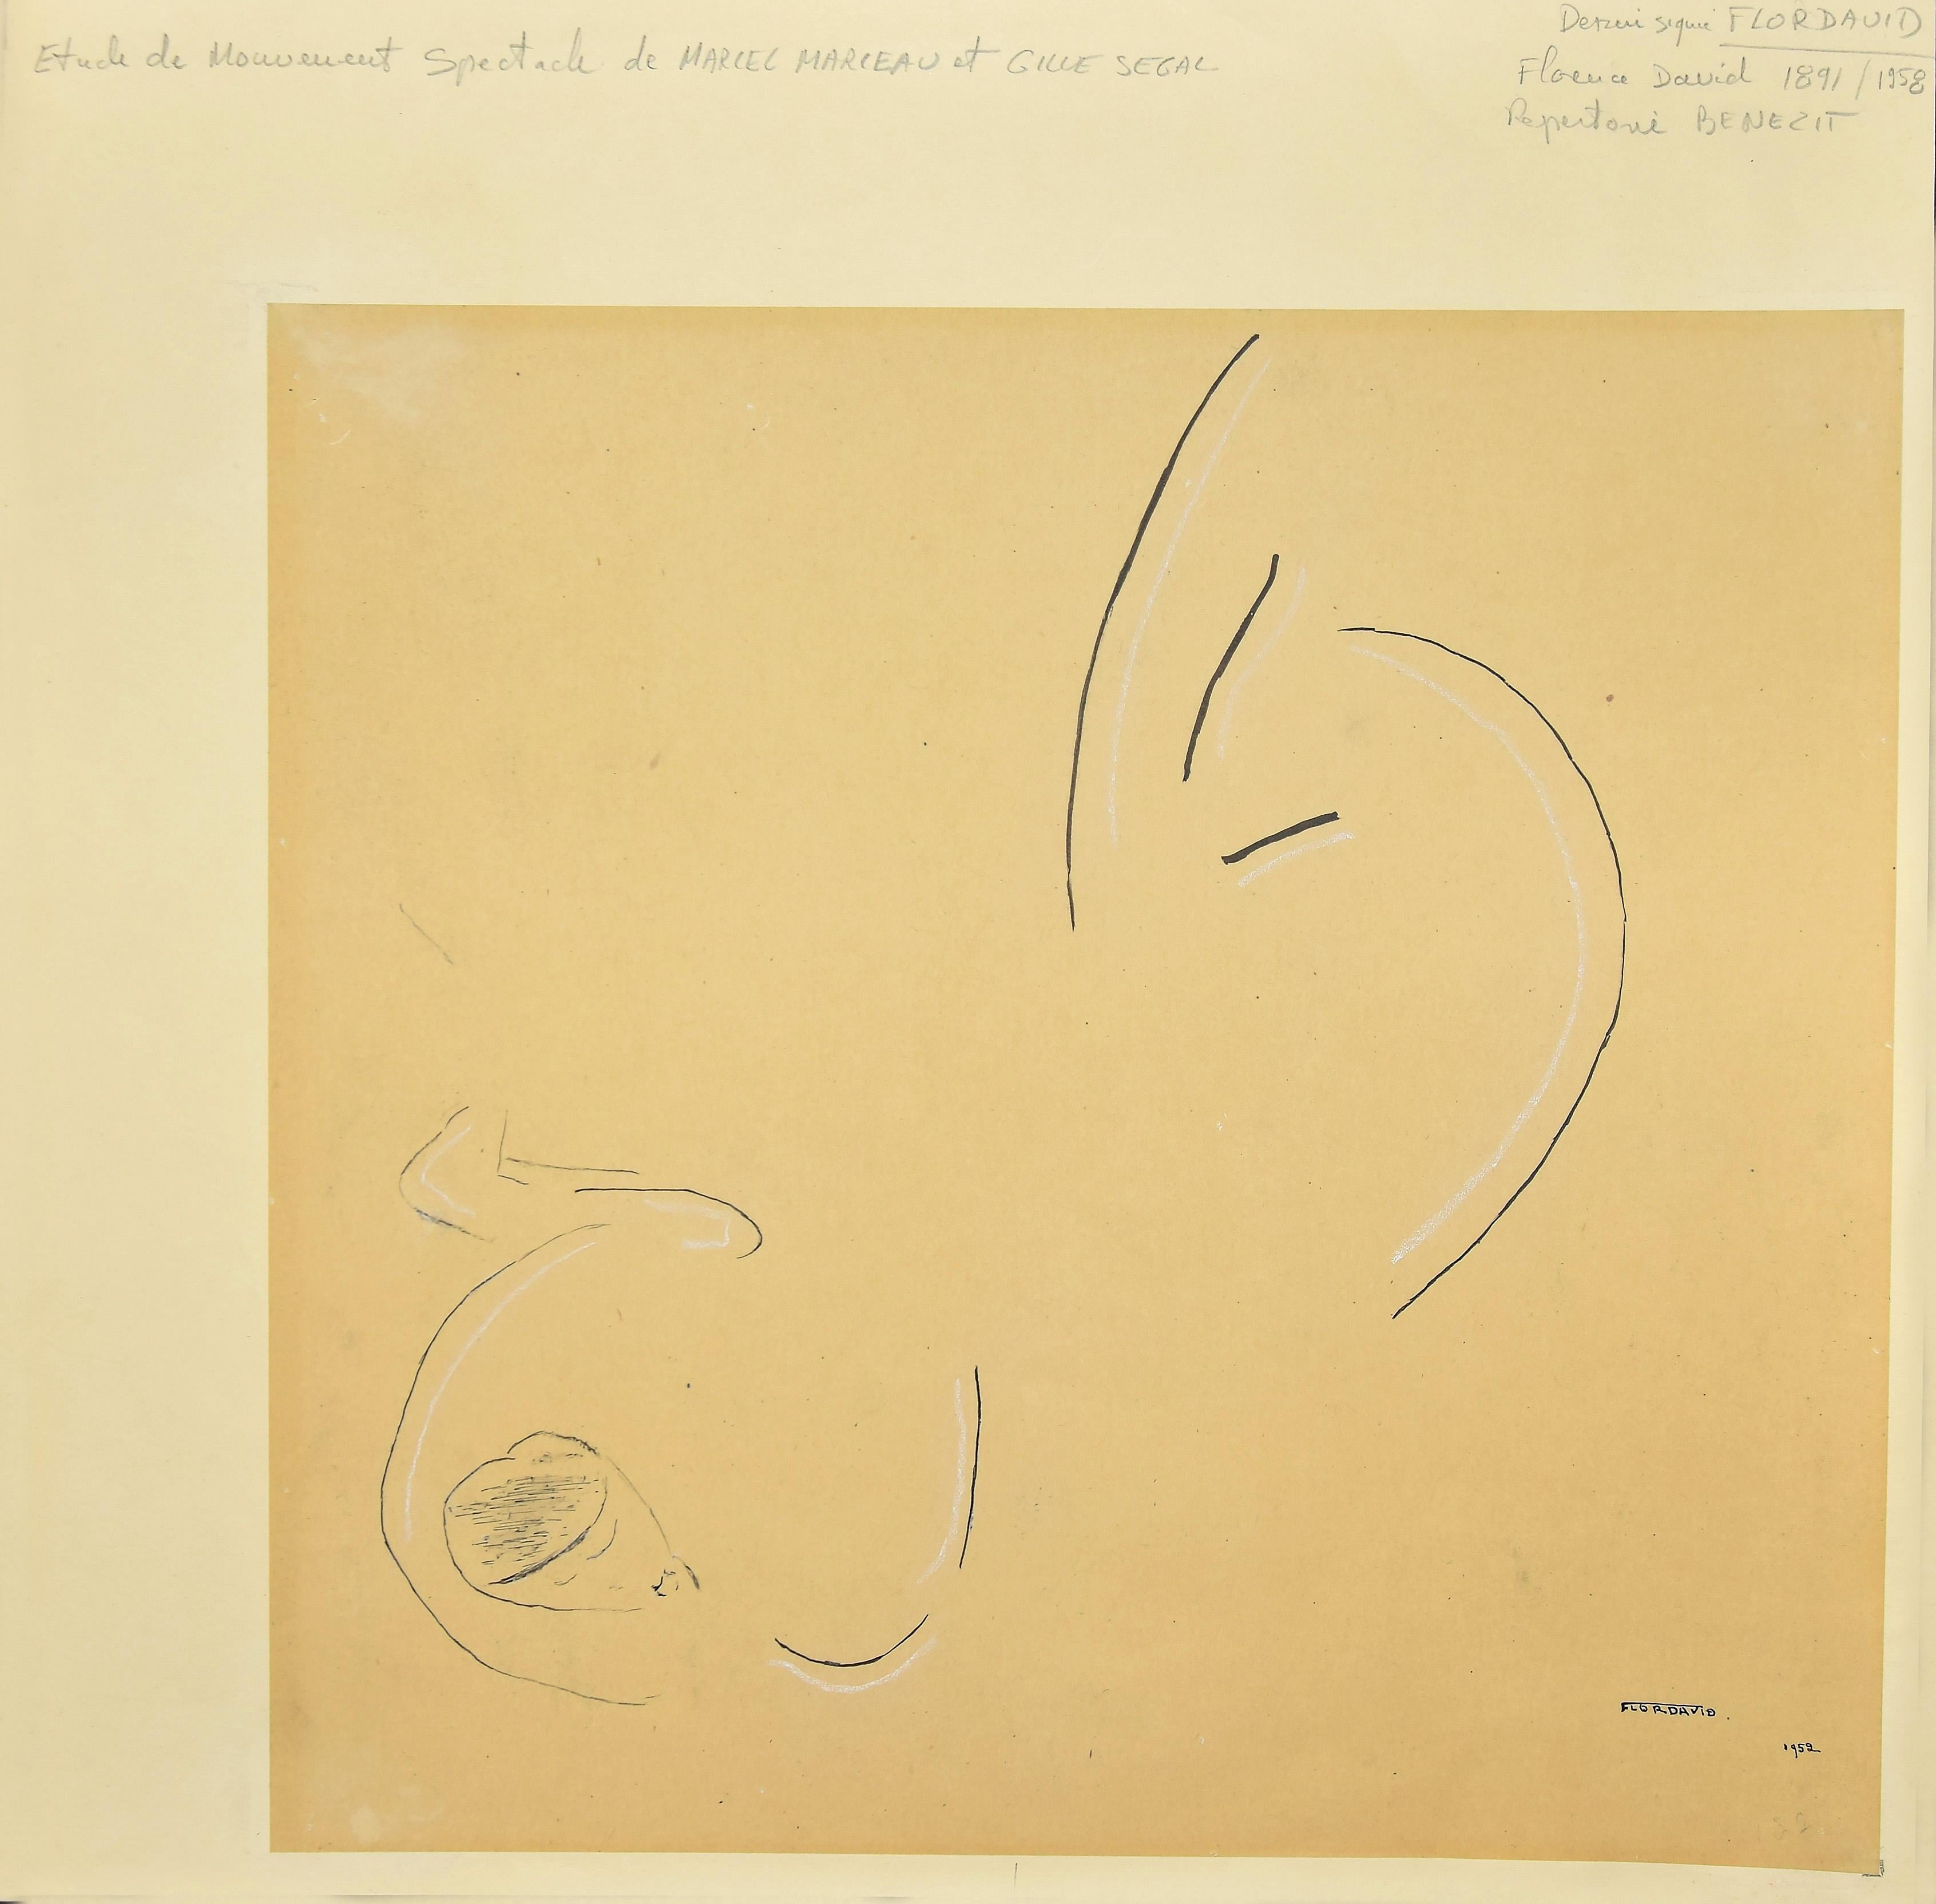 Flor David Abstract Drawing - Étoile de Moment - Black China Ink and Pencil Drawing -  1952